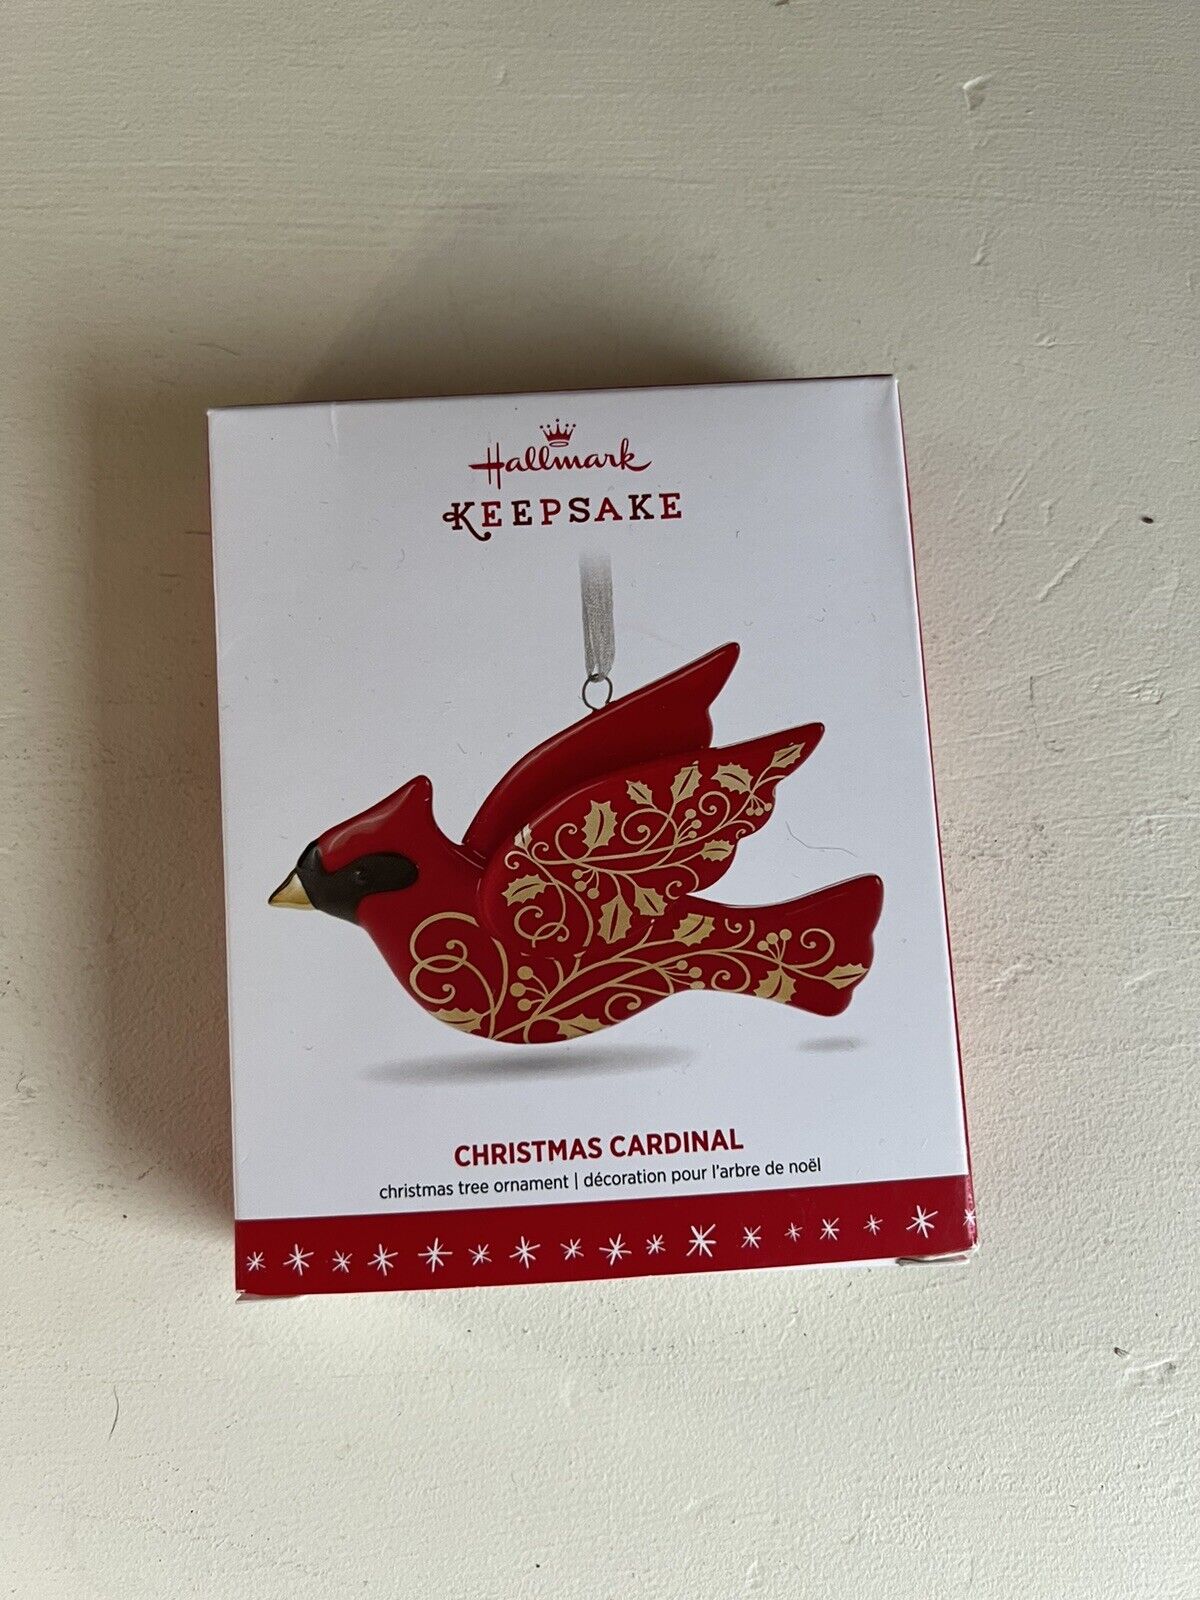 Hallmark Keepsake 2016 Christmas Cardinal - NEW in Box - BEAUTIFUL